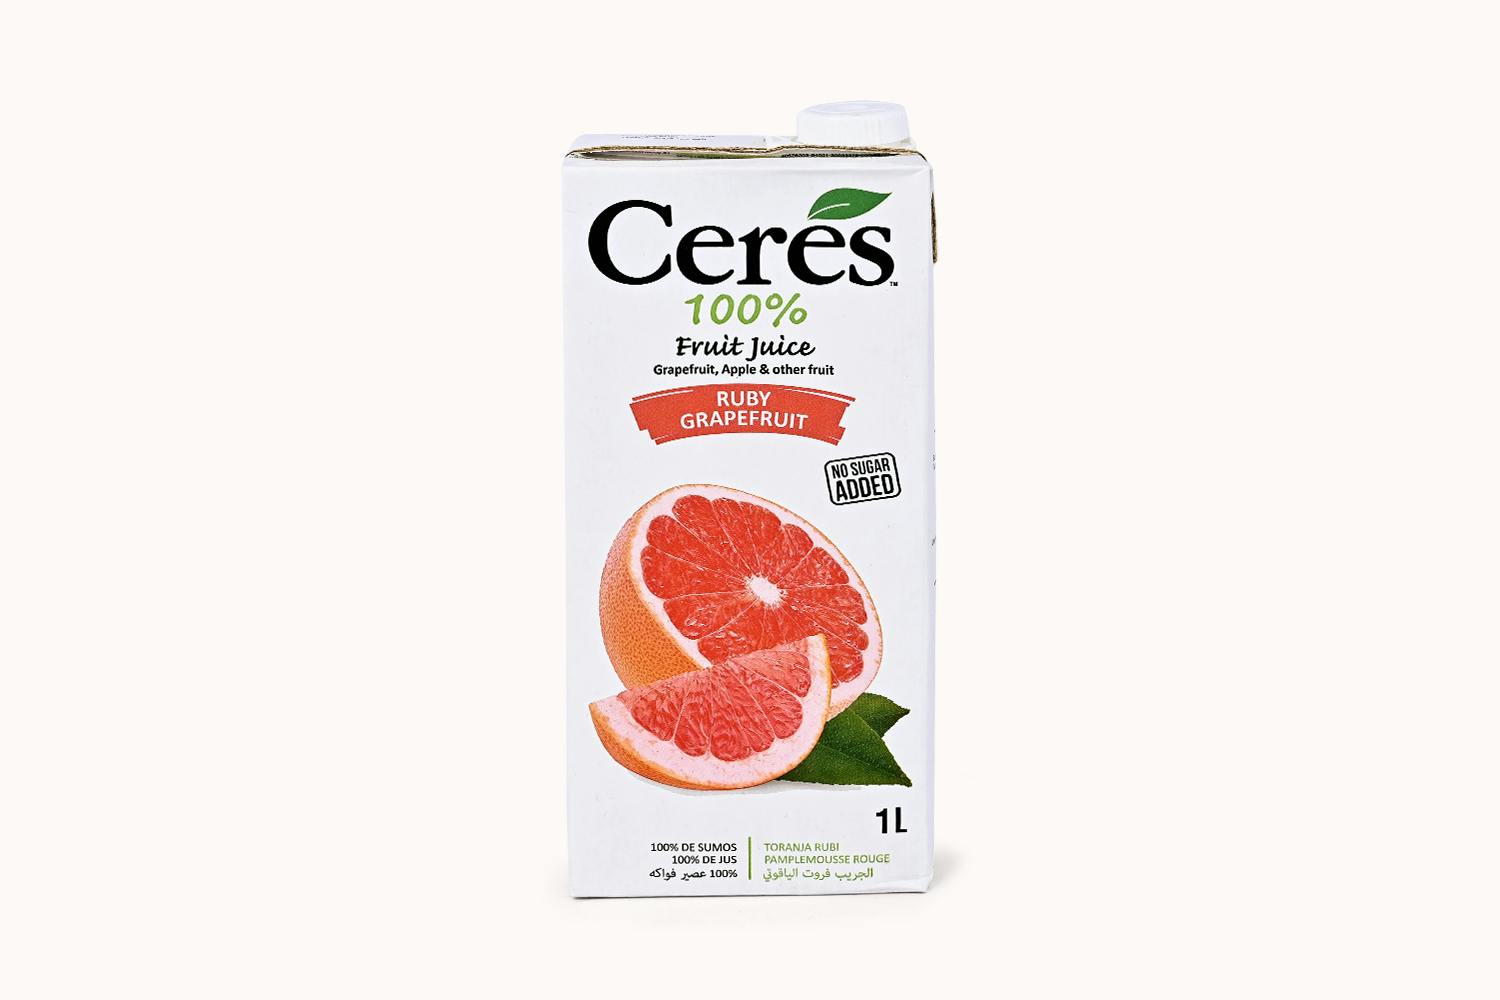 Ceres Ruby Grapefruit Fruit Juice